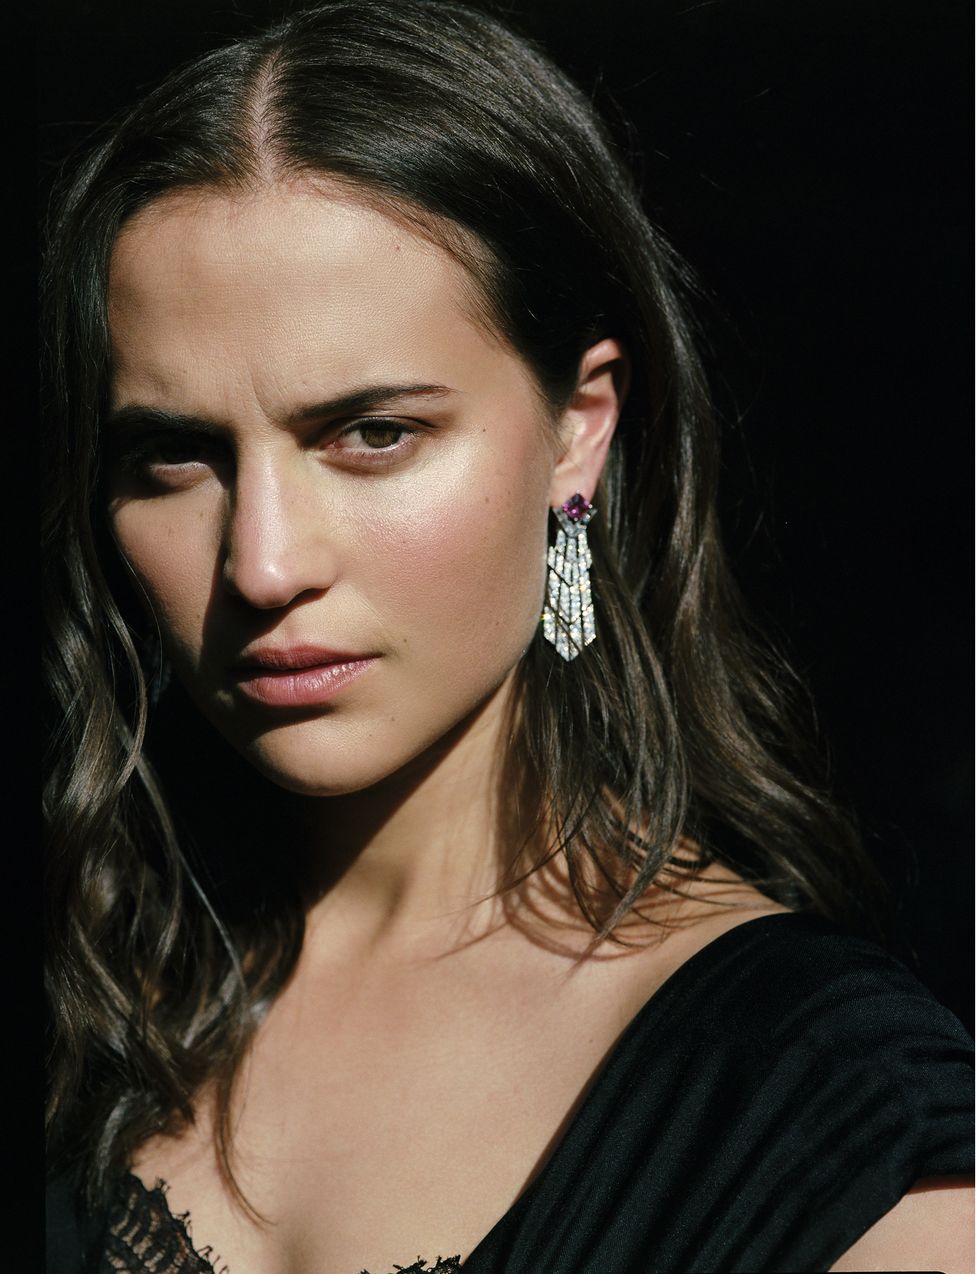 Earrings worn by Mira (Alicia Vikander) as seen in Irma Vep TV